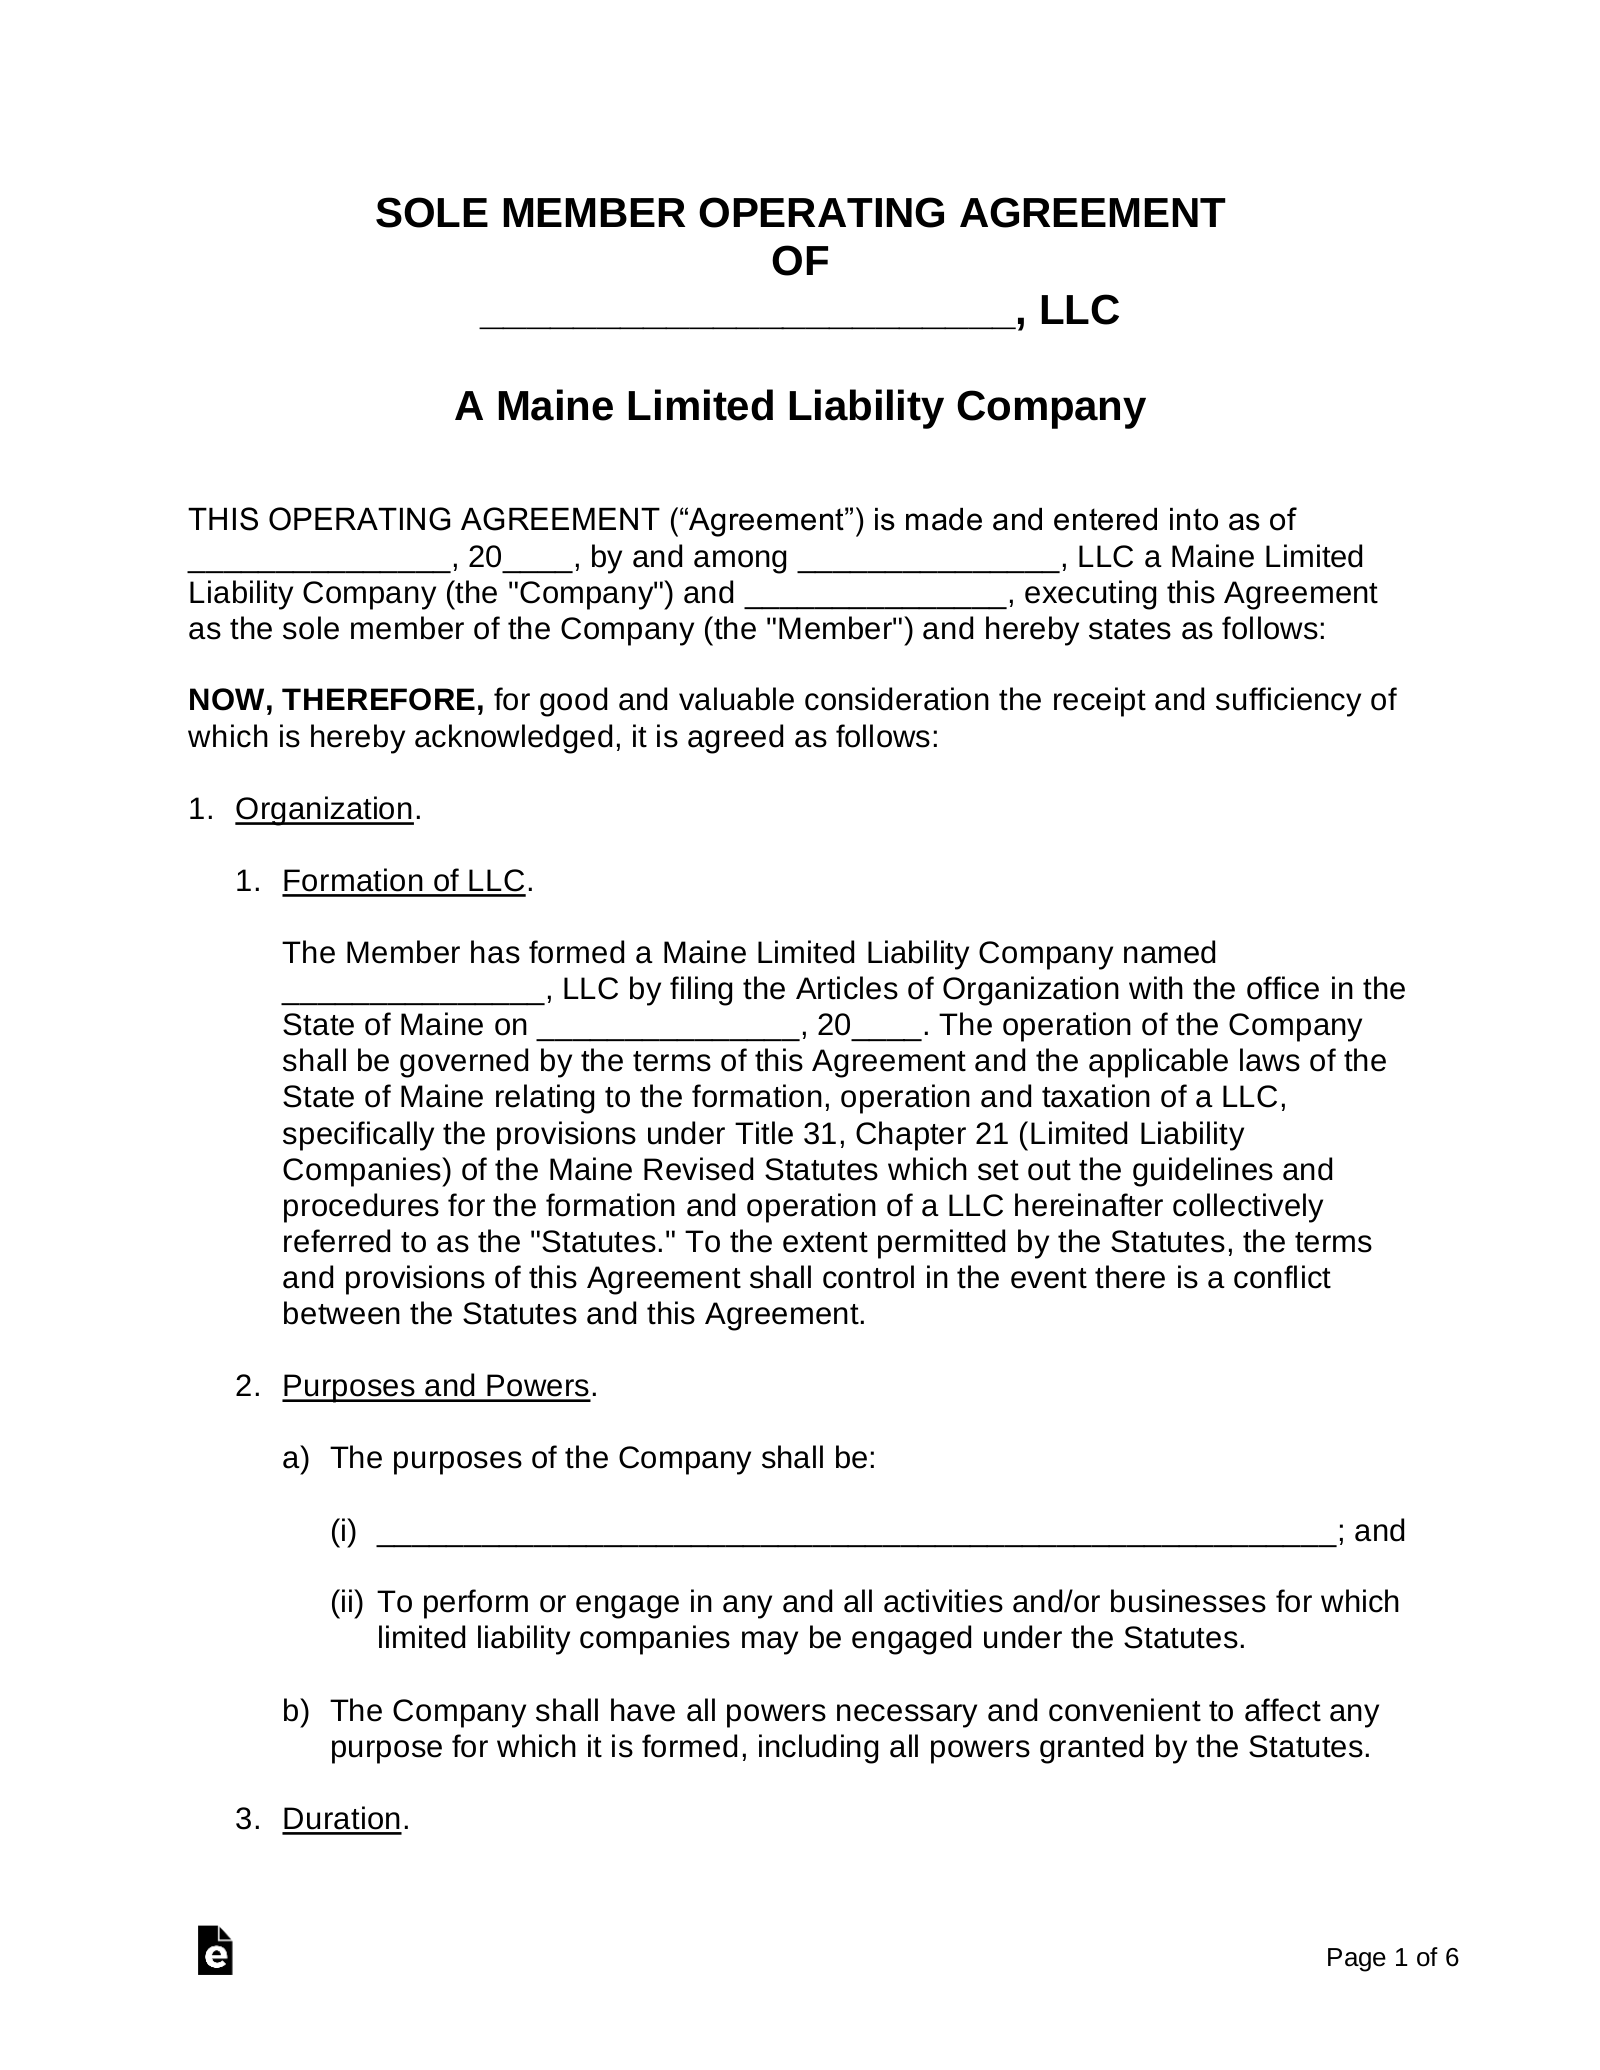 Maine Single Member LLC Operating Agreement Form